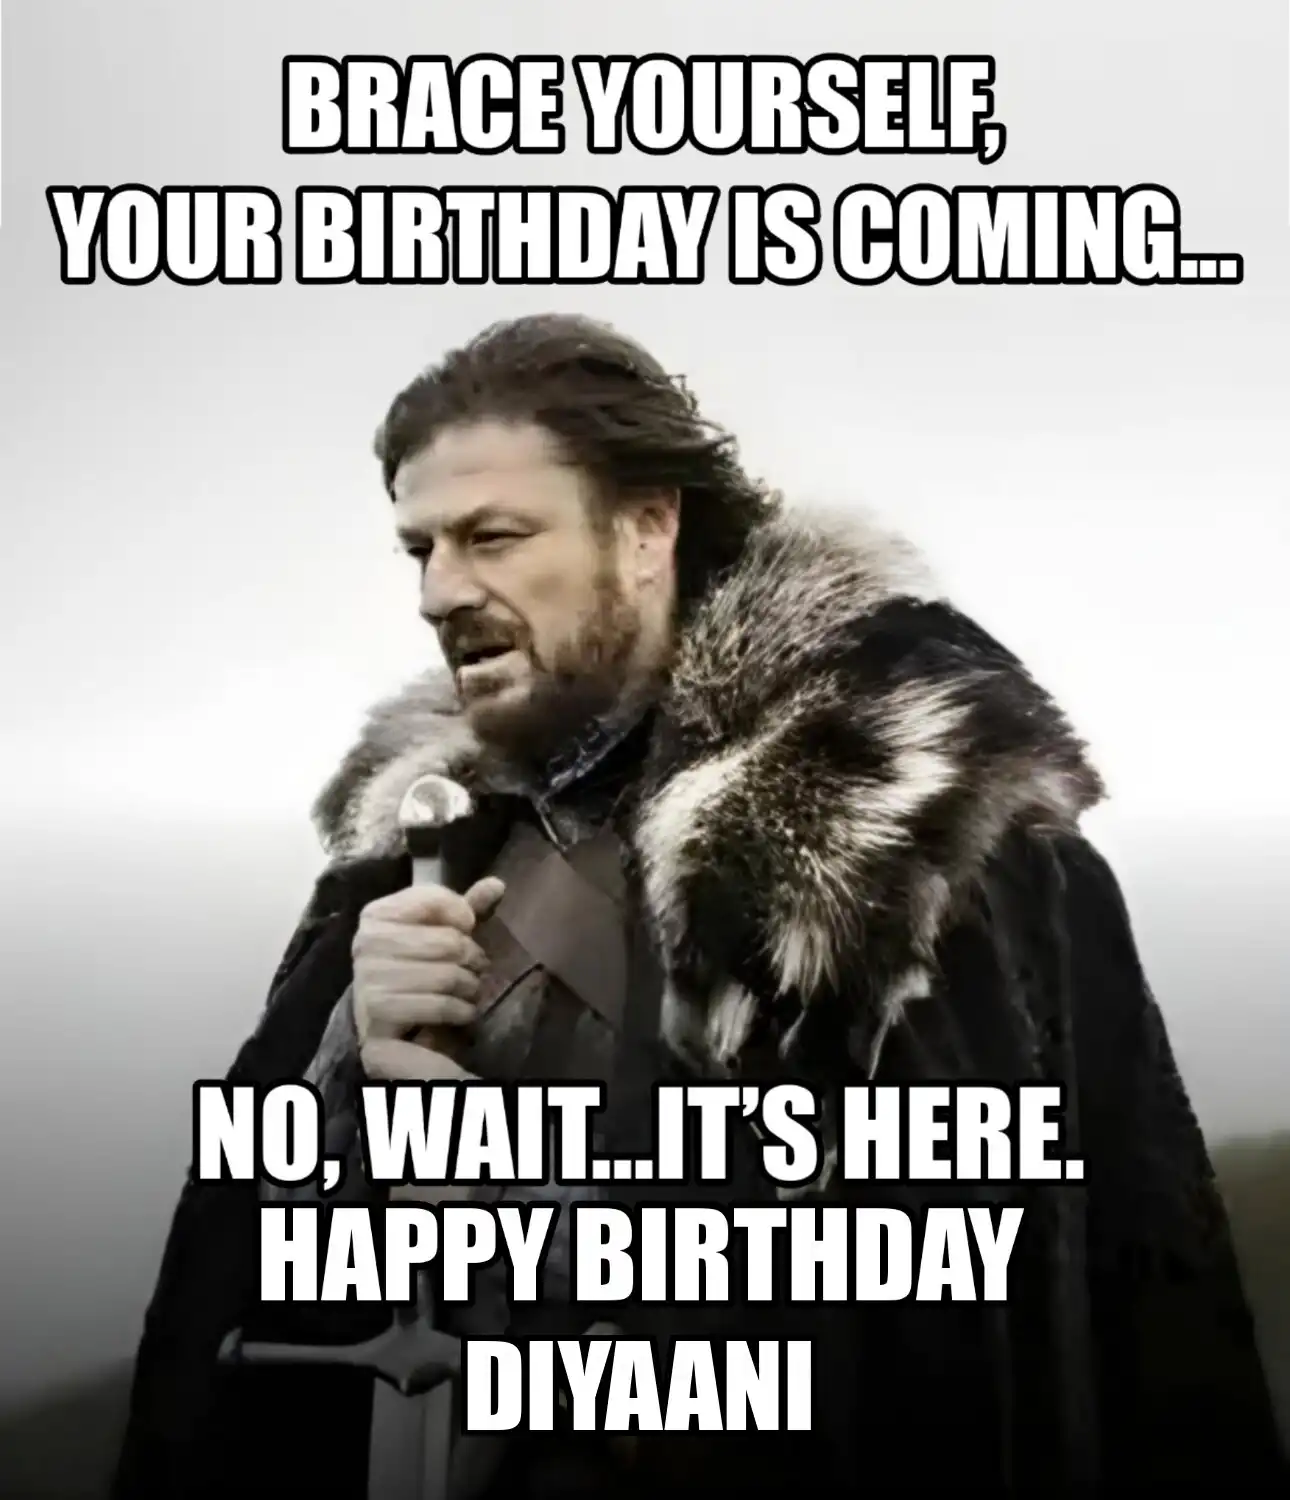 Happy Birthday Diyaani Brace Yourself Your Birthday Is Coming Meme